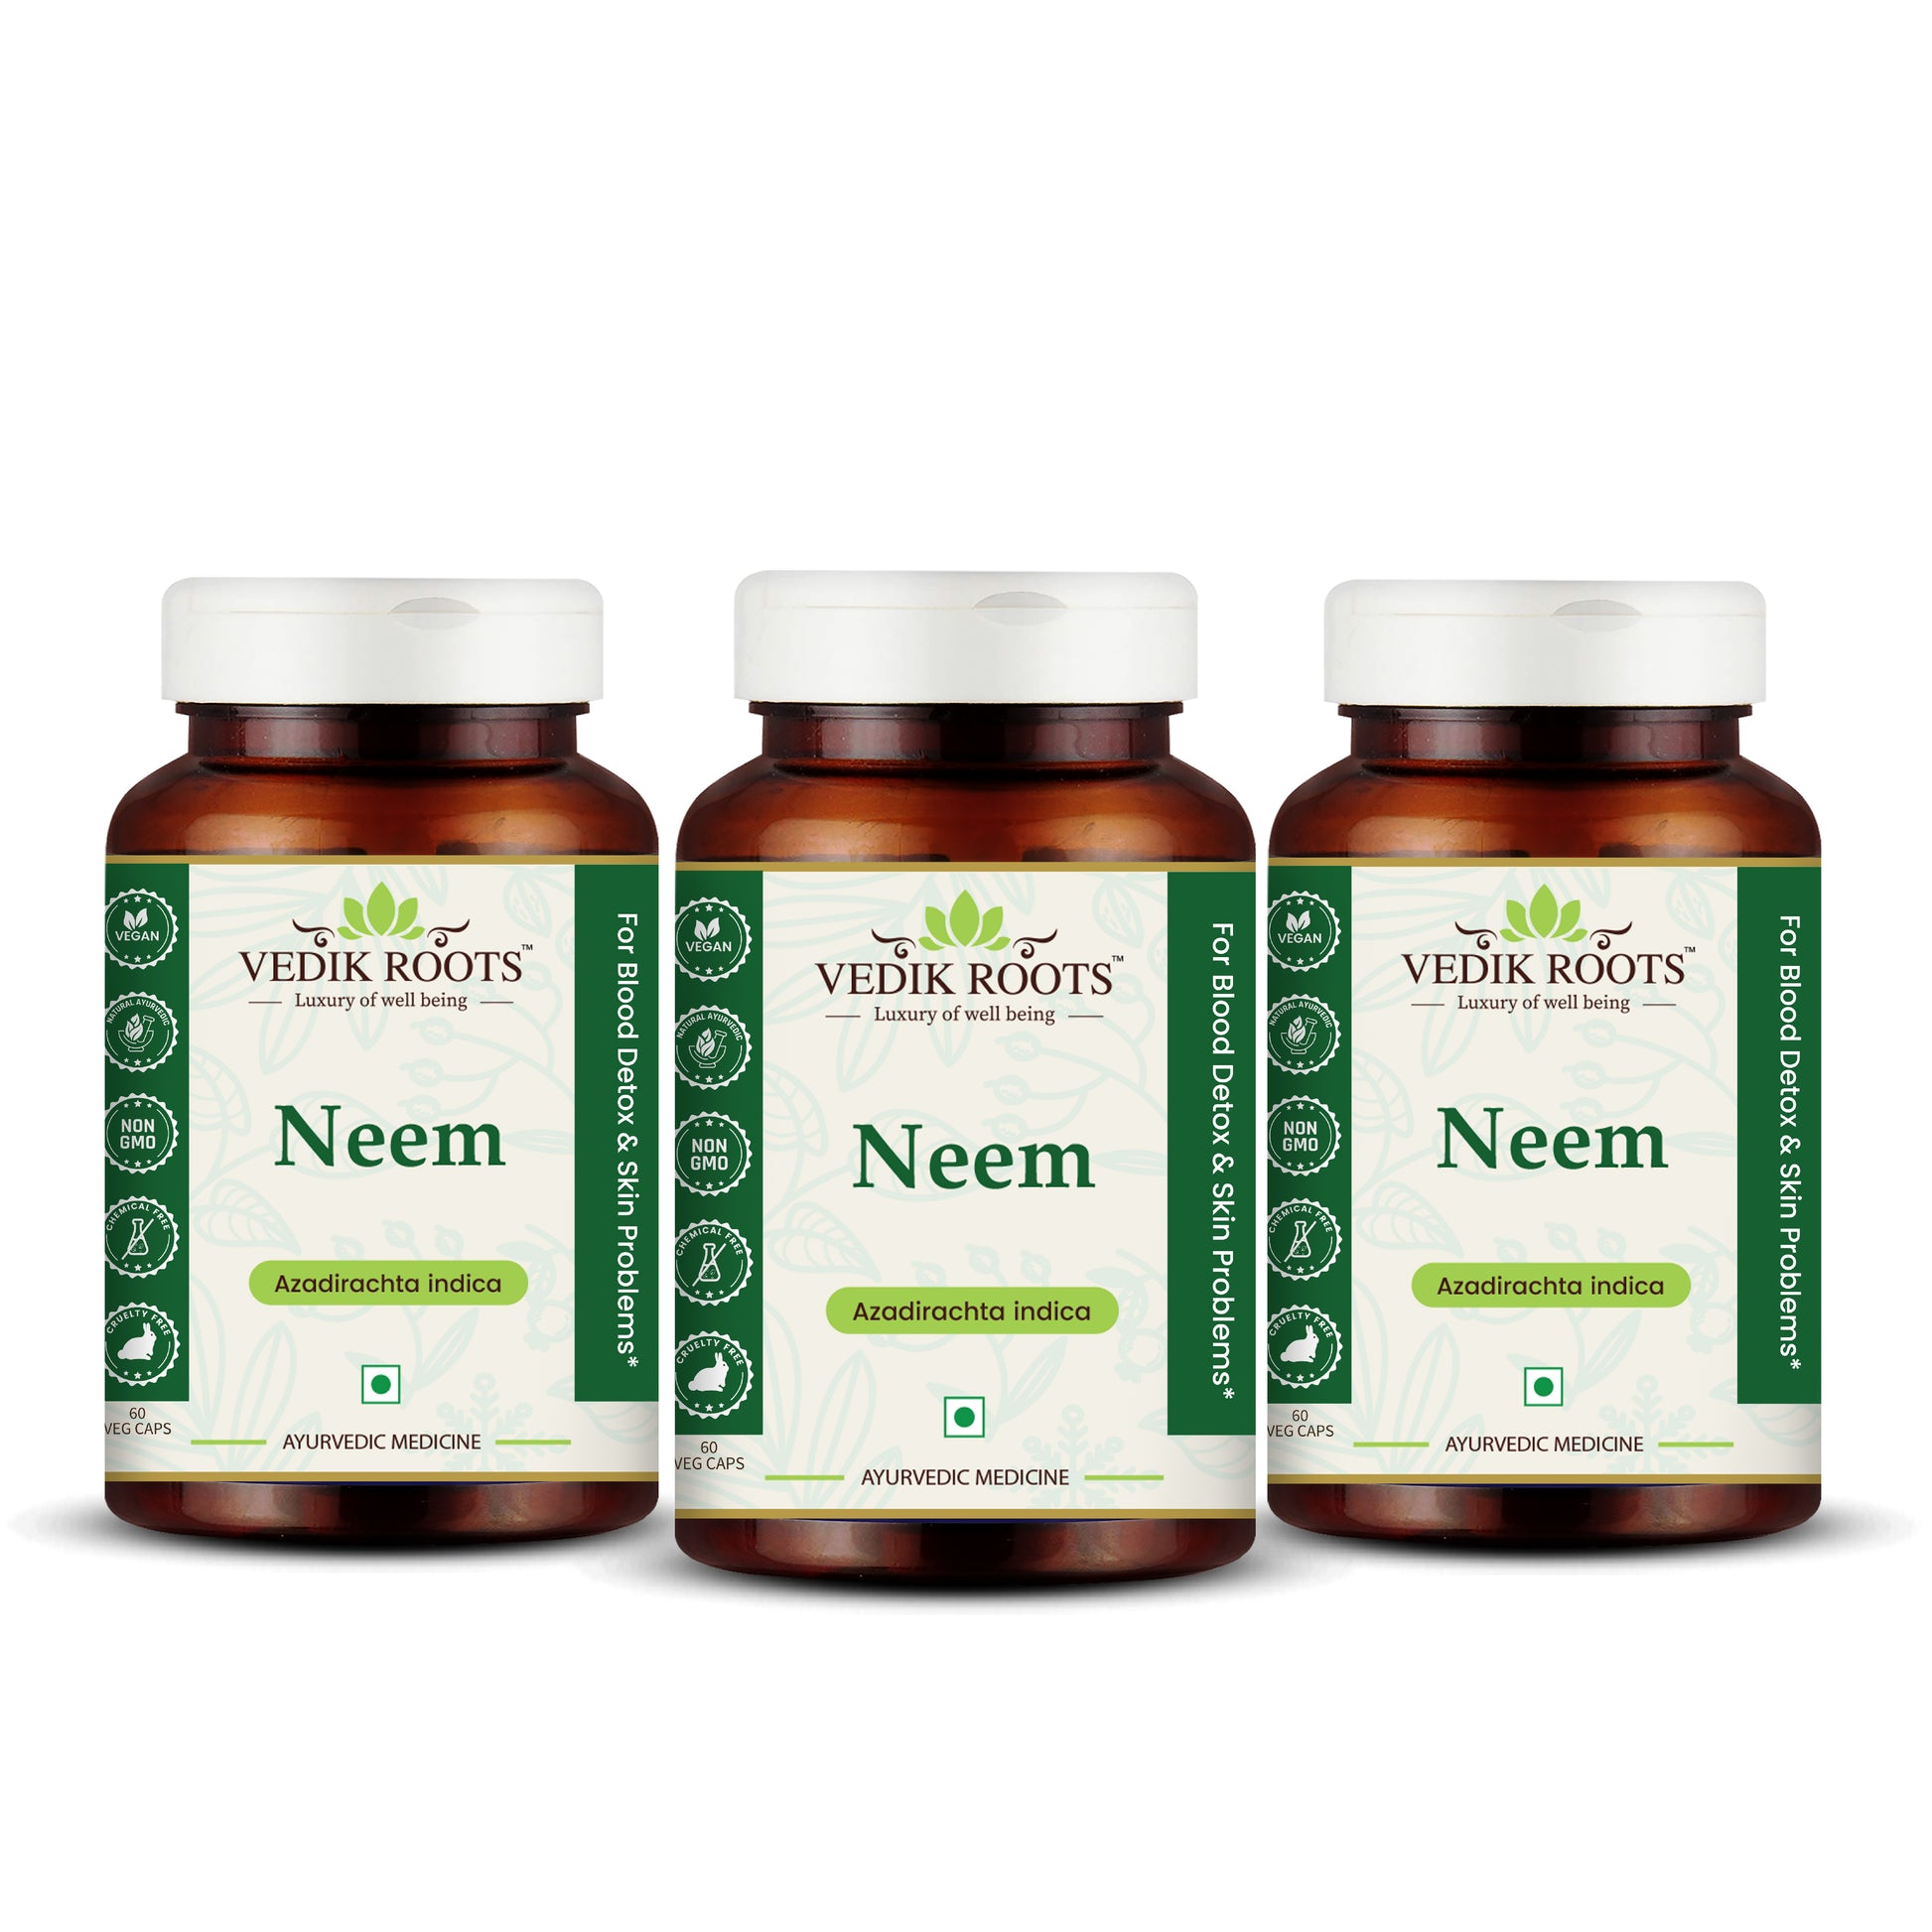 Buy Neem Tablets Online in India